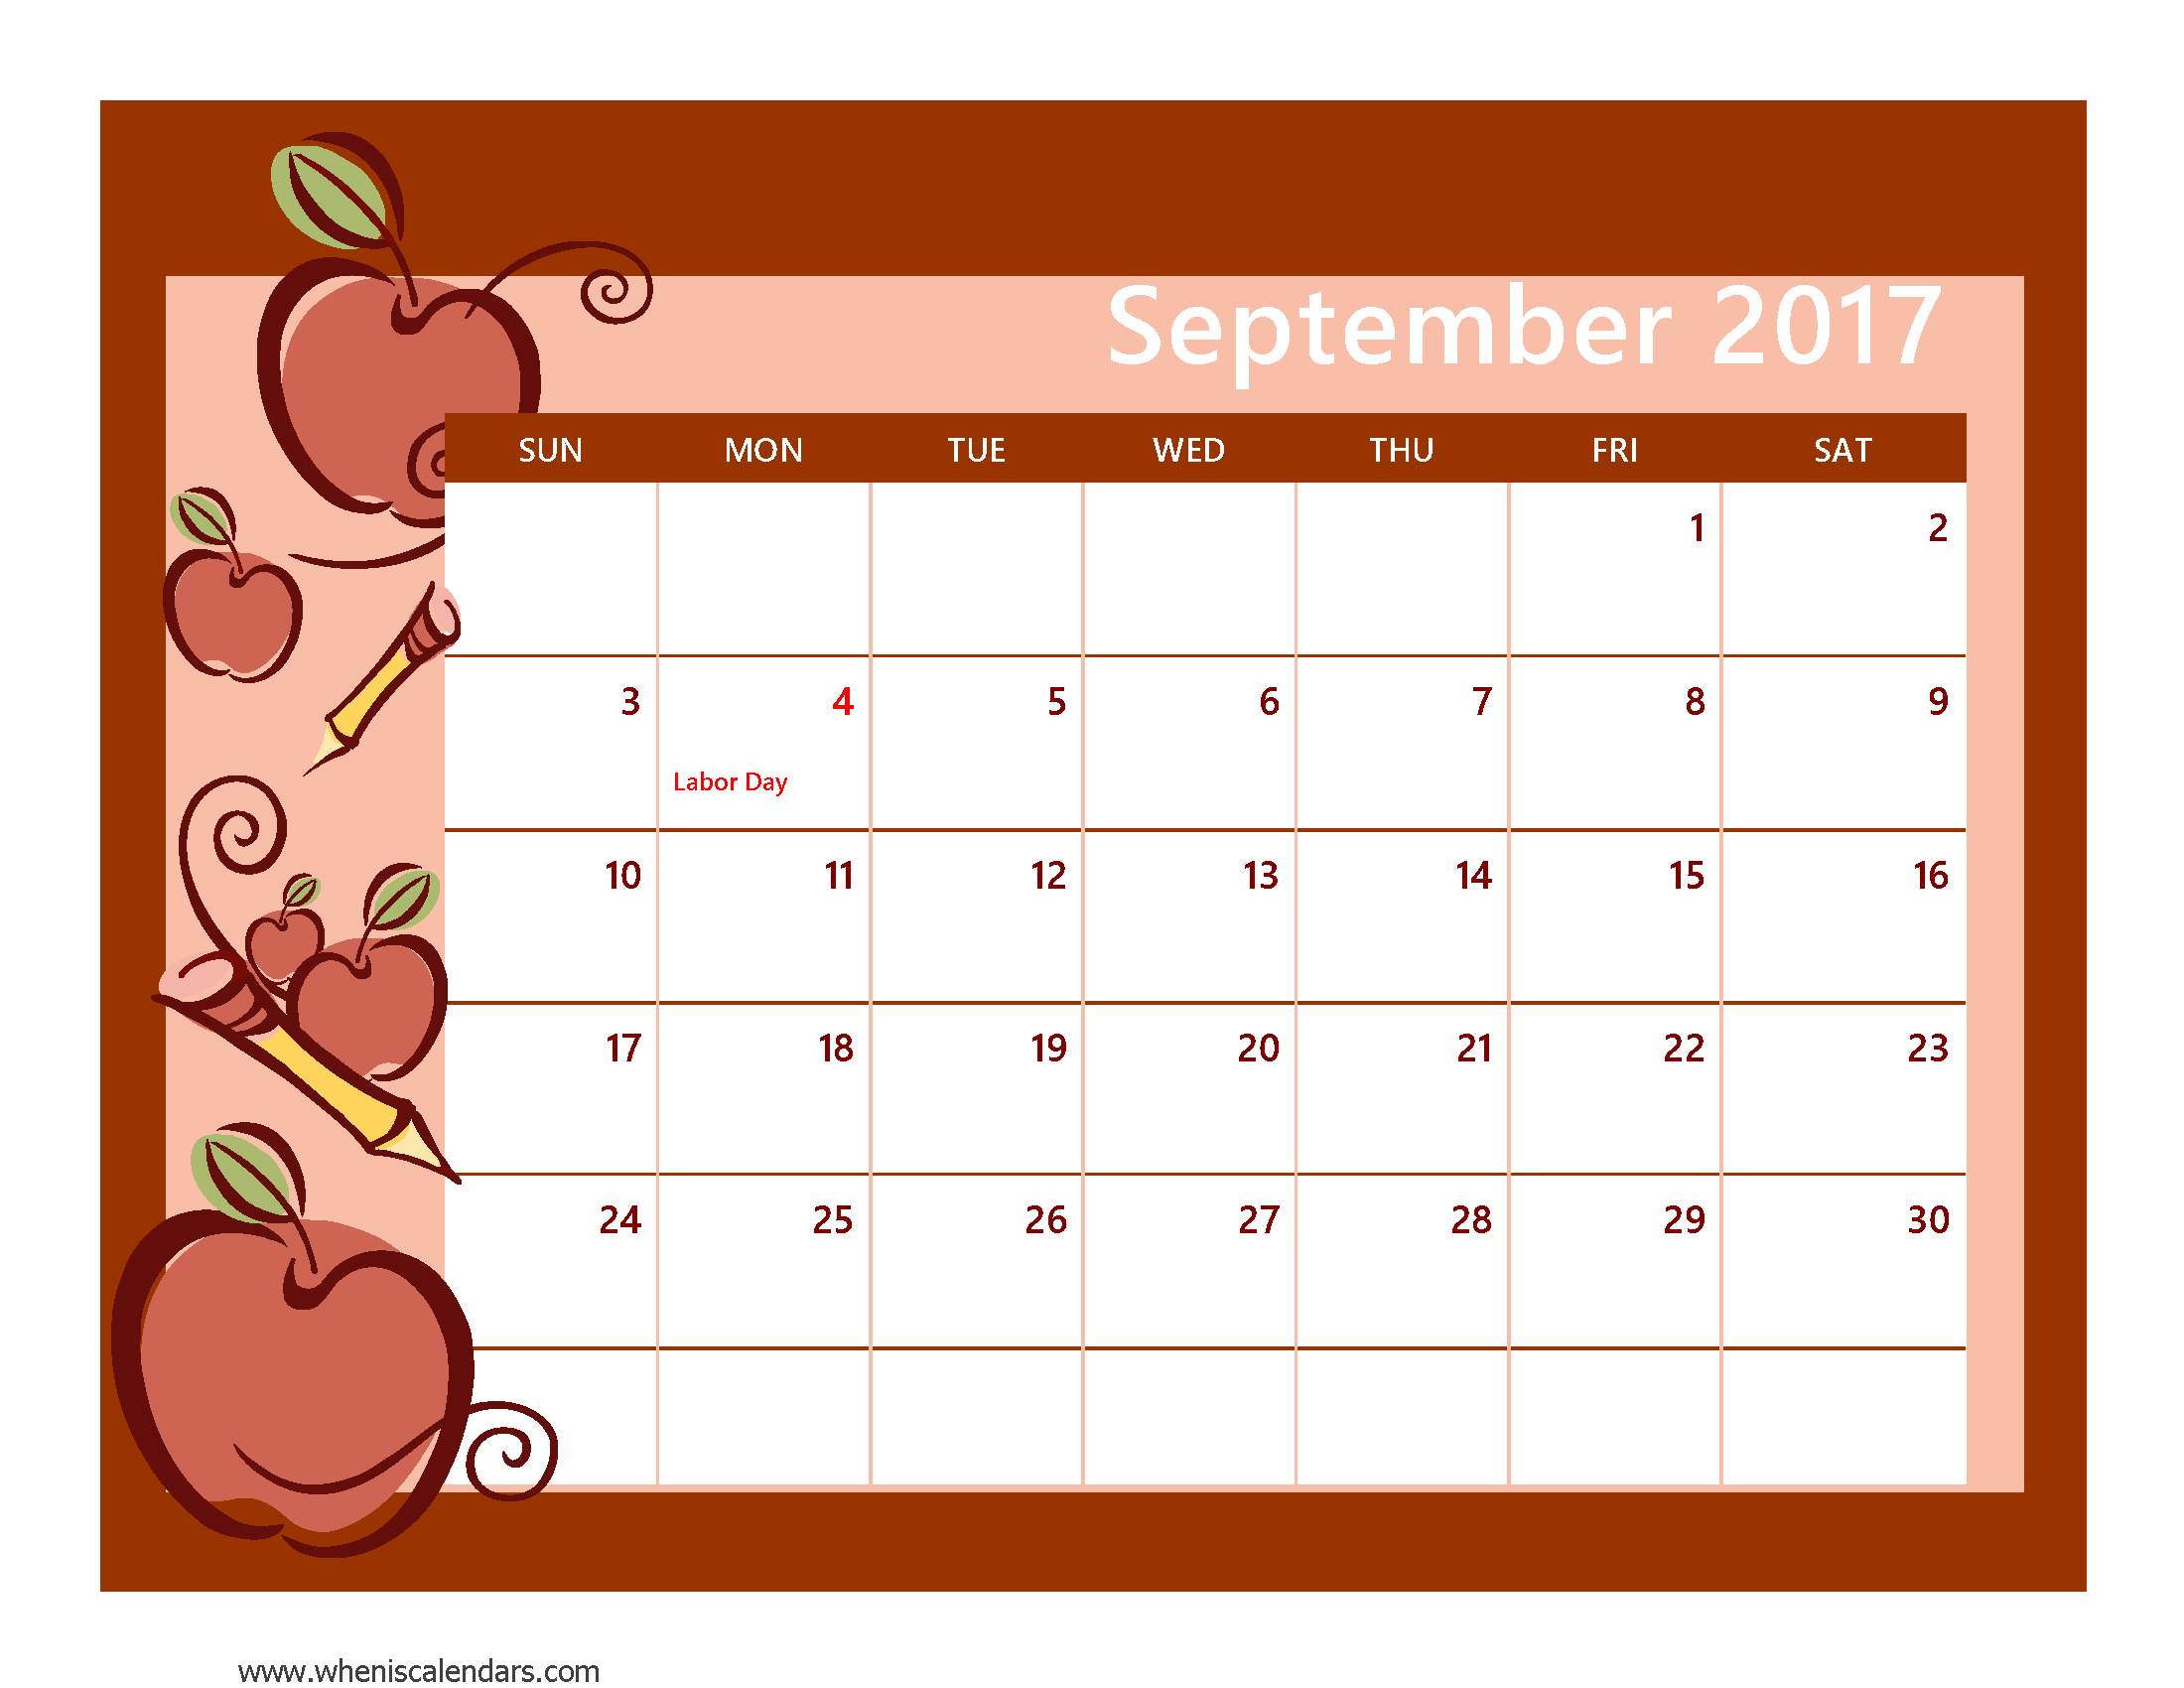 September 2017 Calendar With Holidays | weekly calendar template